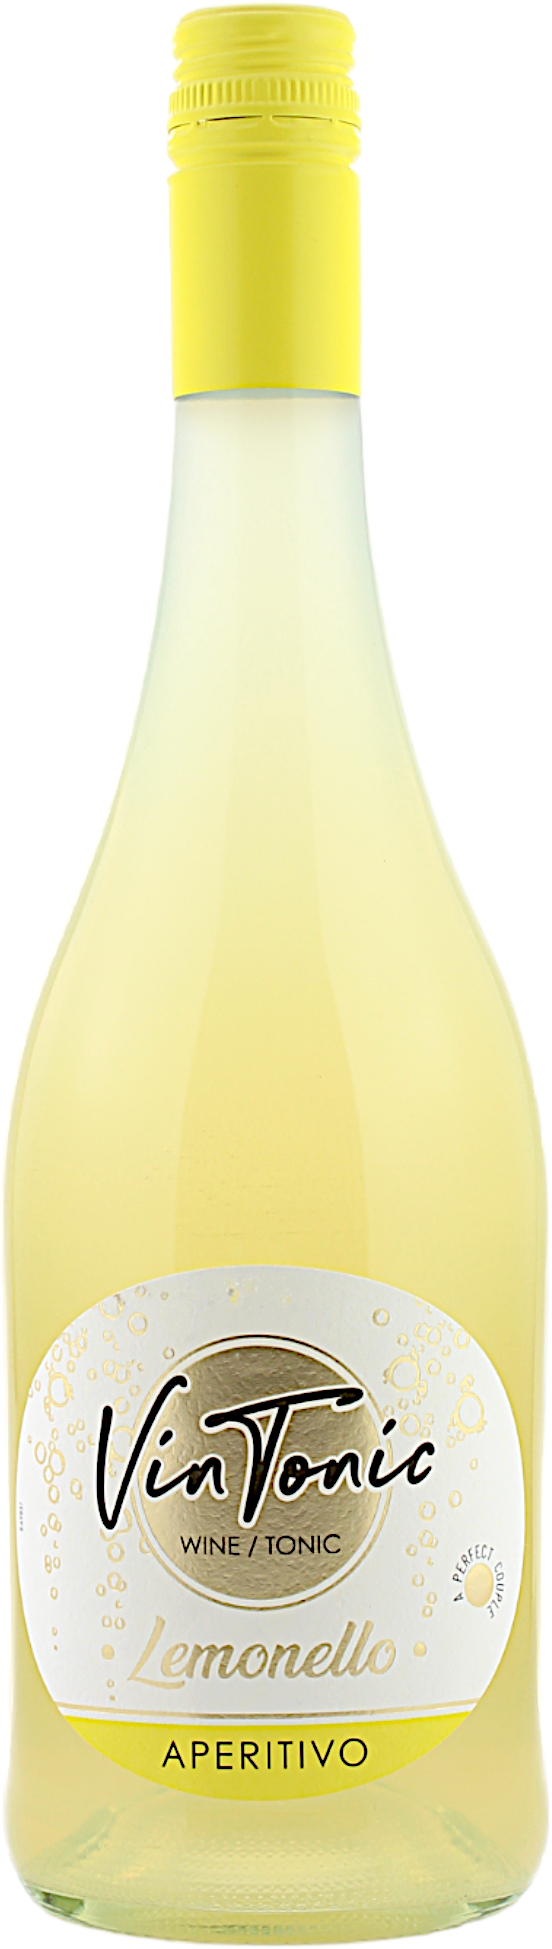 VinTonic Lemonello Aperitivo 5.7% 0,75l